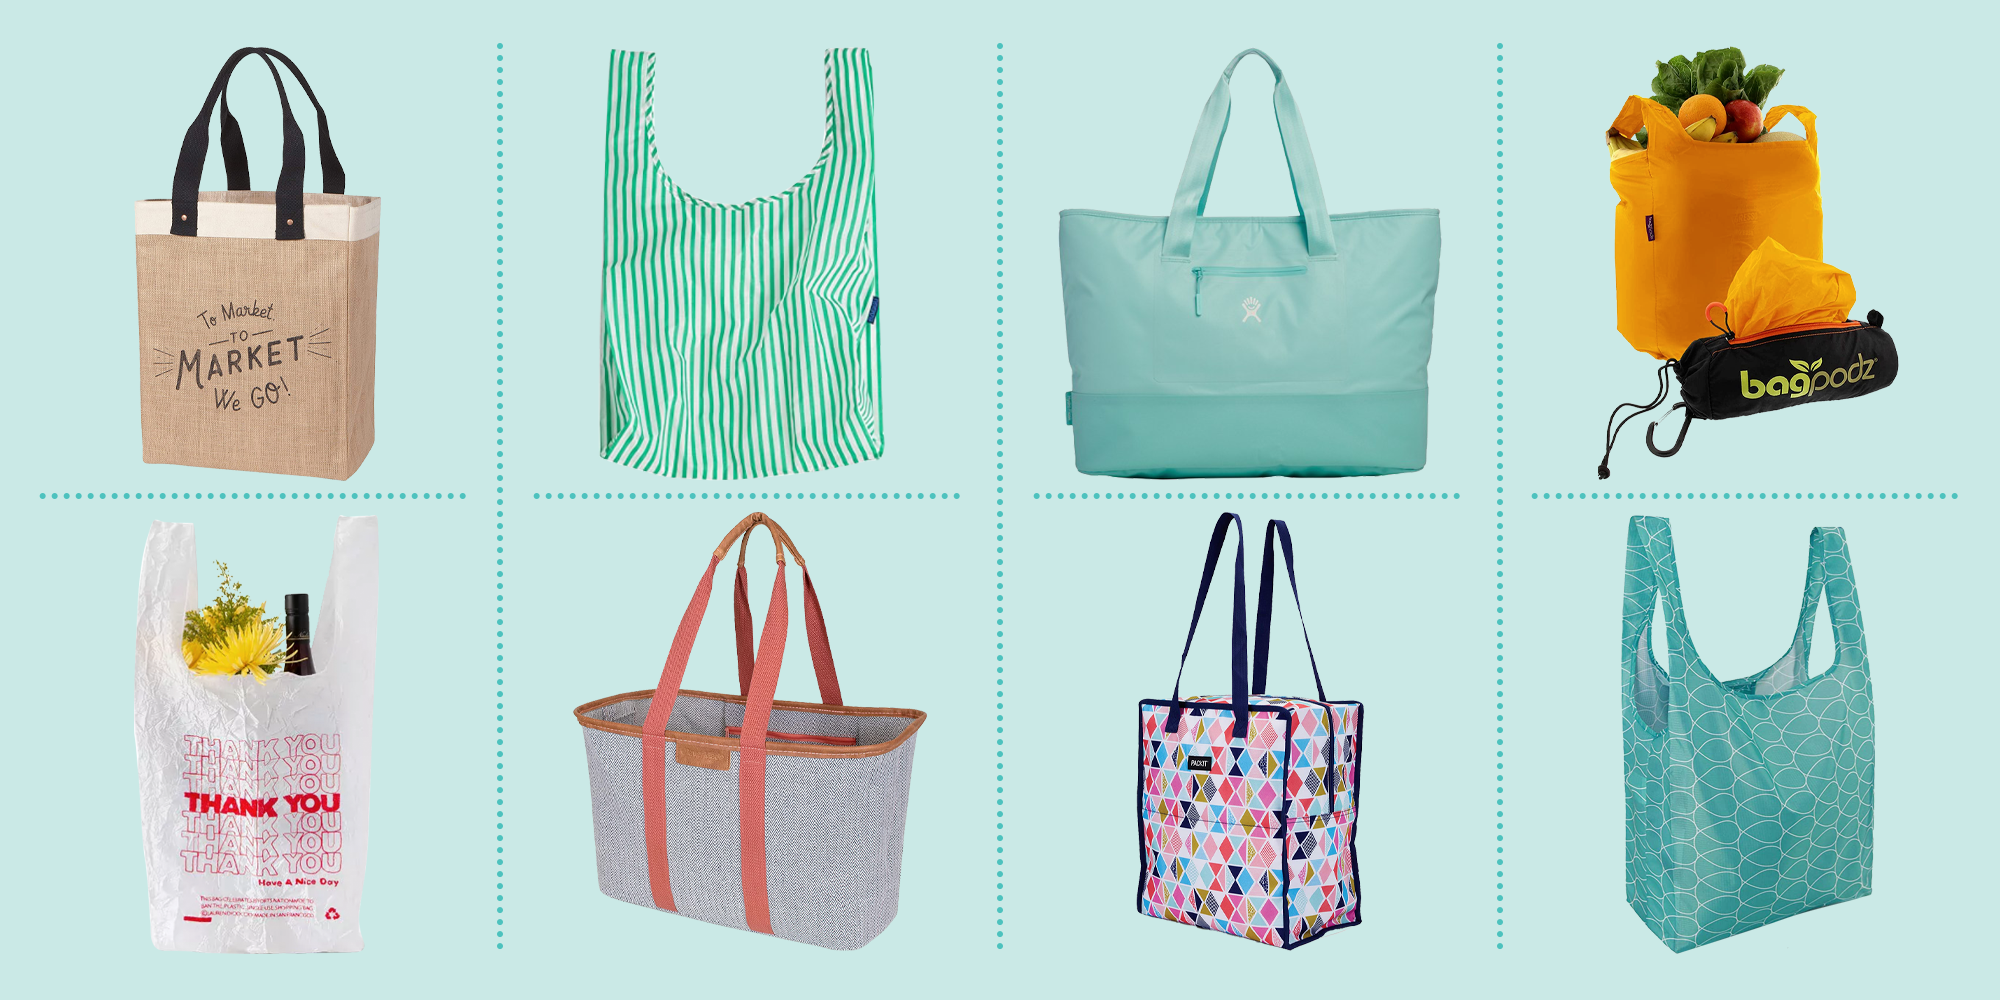 Shoppers Bag Bag for Life Shopping Bag Waterproof bag Tote Bag Market Bag Sustainable Bag